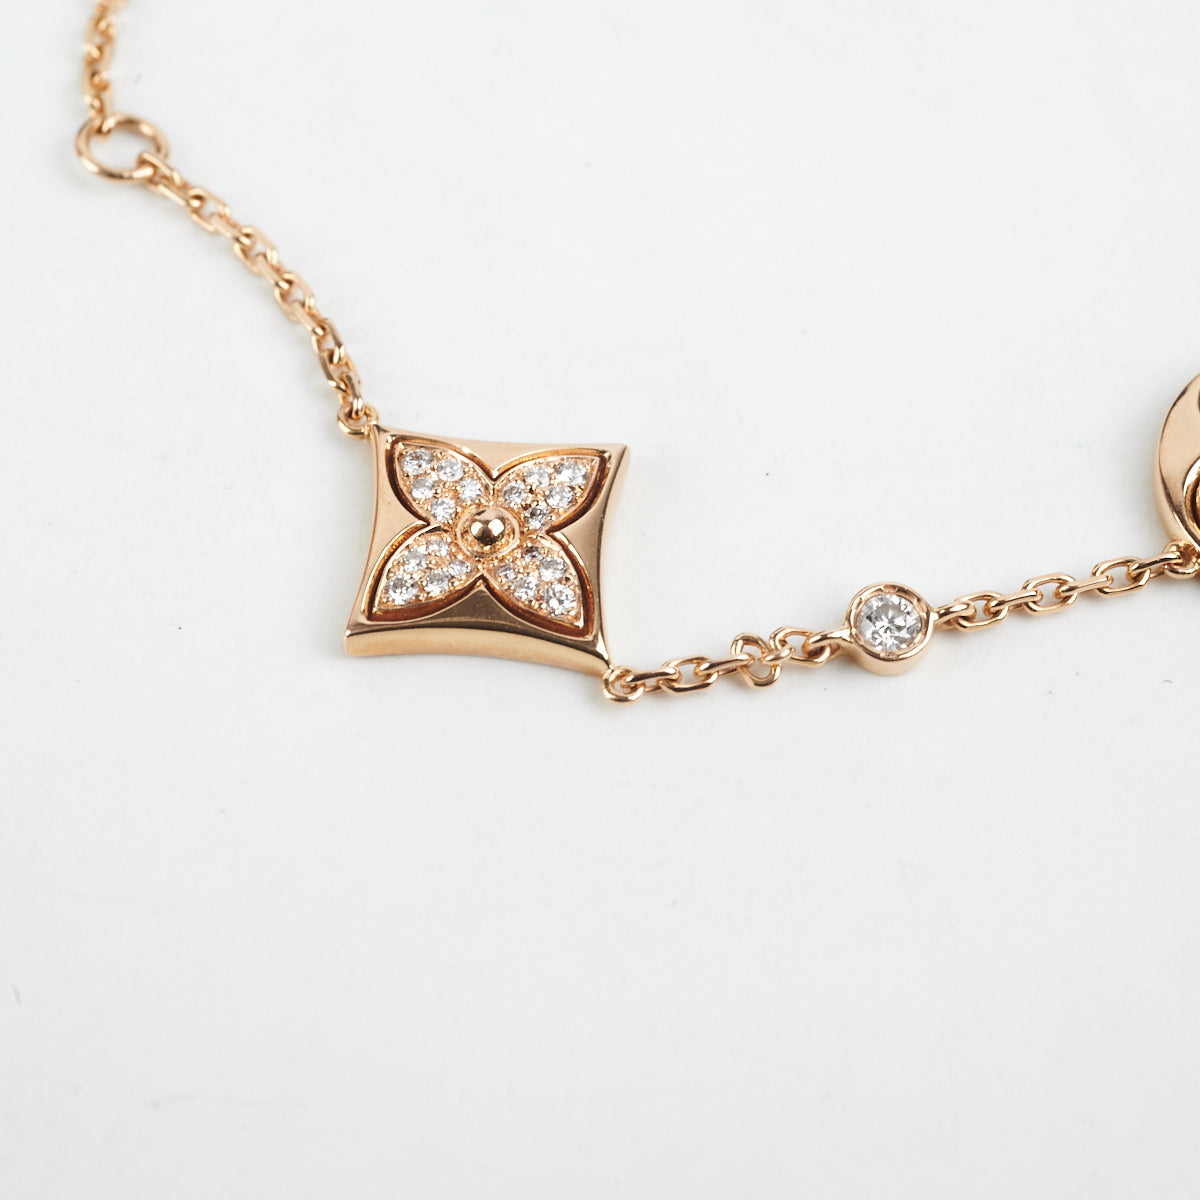 Pink Multi Gemstone Motif Bracelet - Gold – Cernucci US